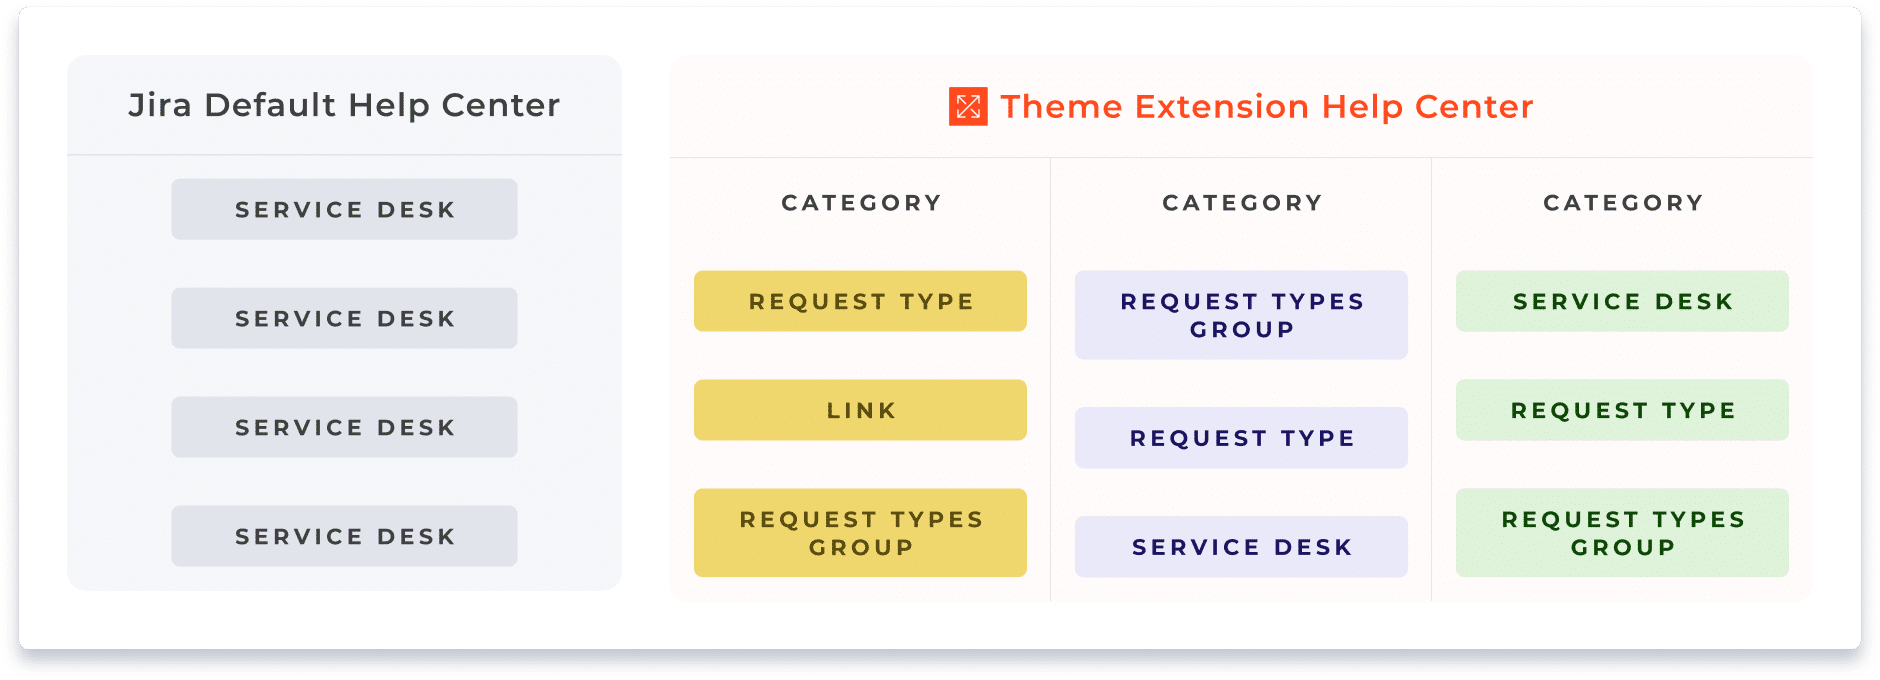 Jira Default Help Center: Service Desk. Theme Extension Help Center: categories.